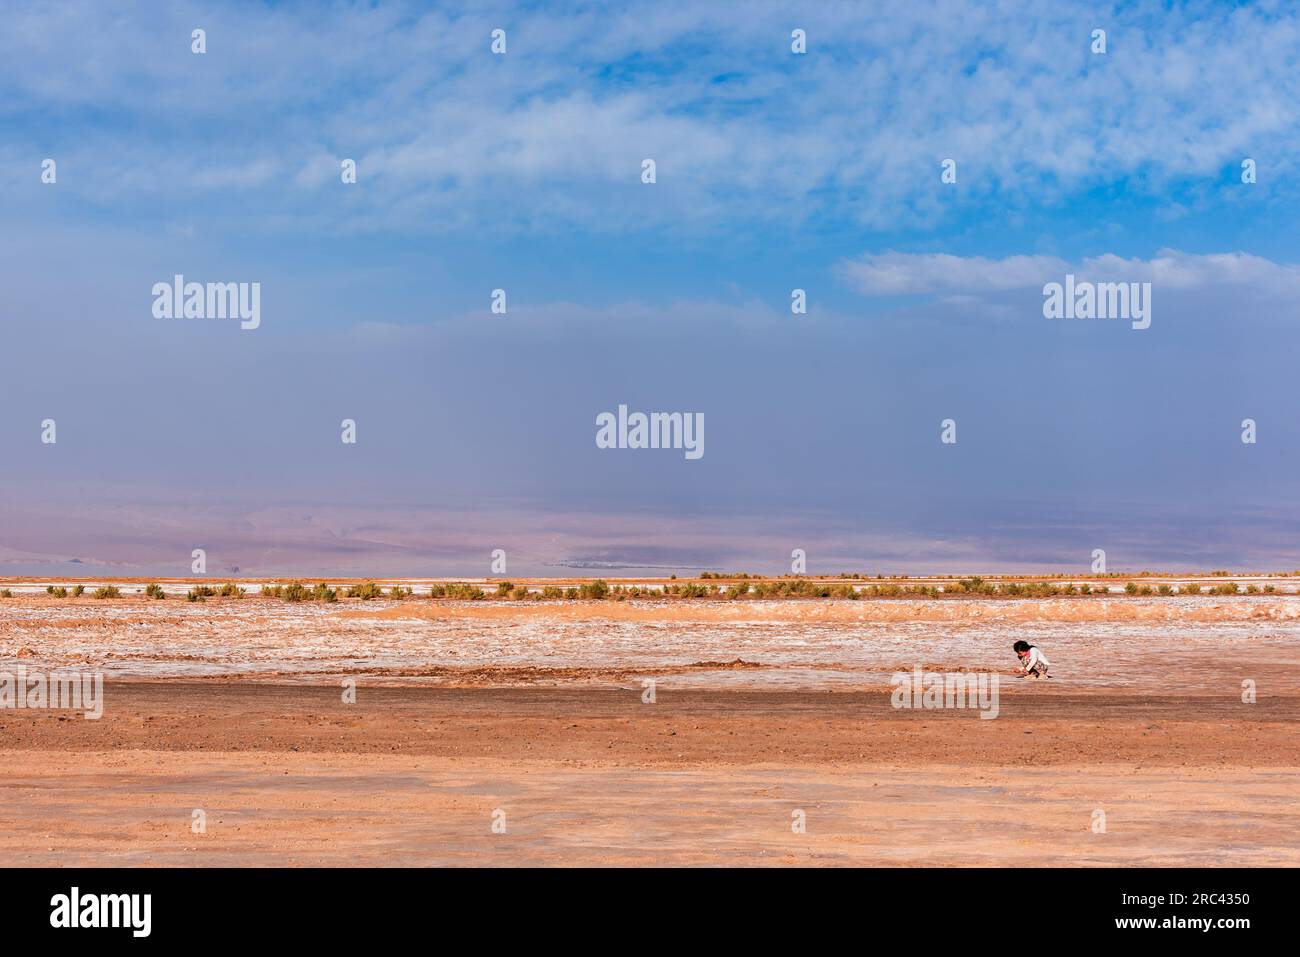 Lonely child playing alone in Atacama desert Stock Photo